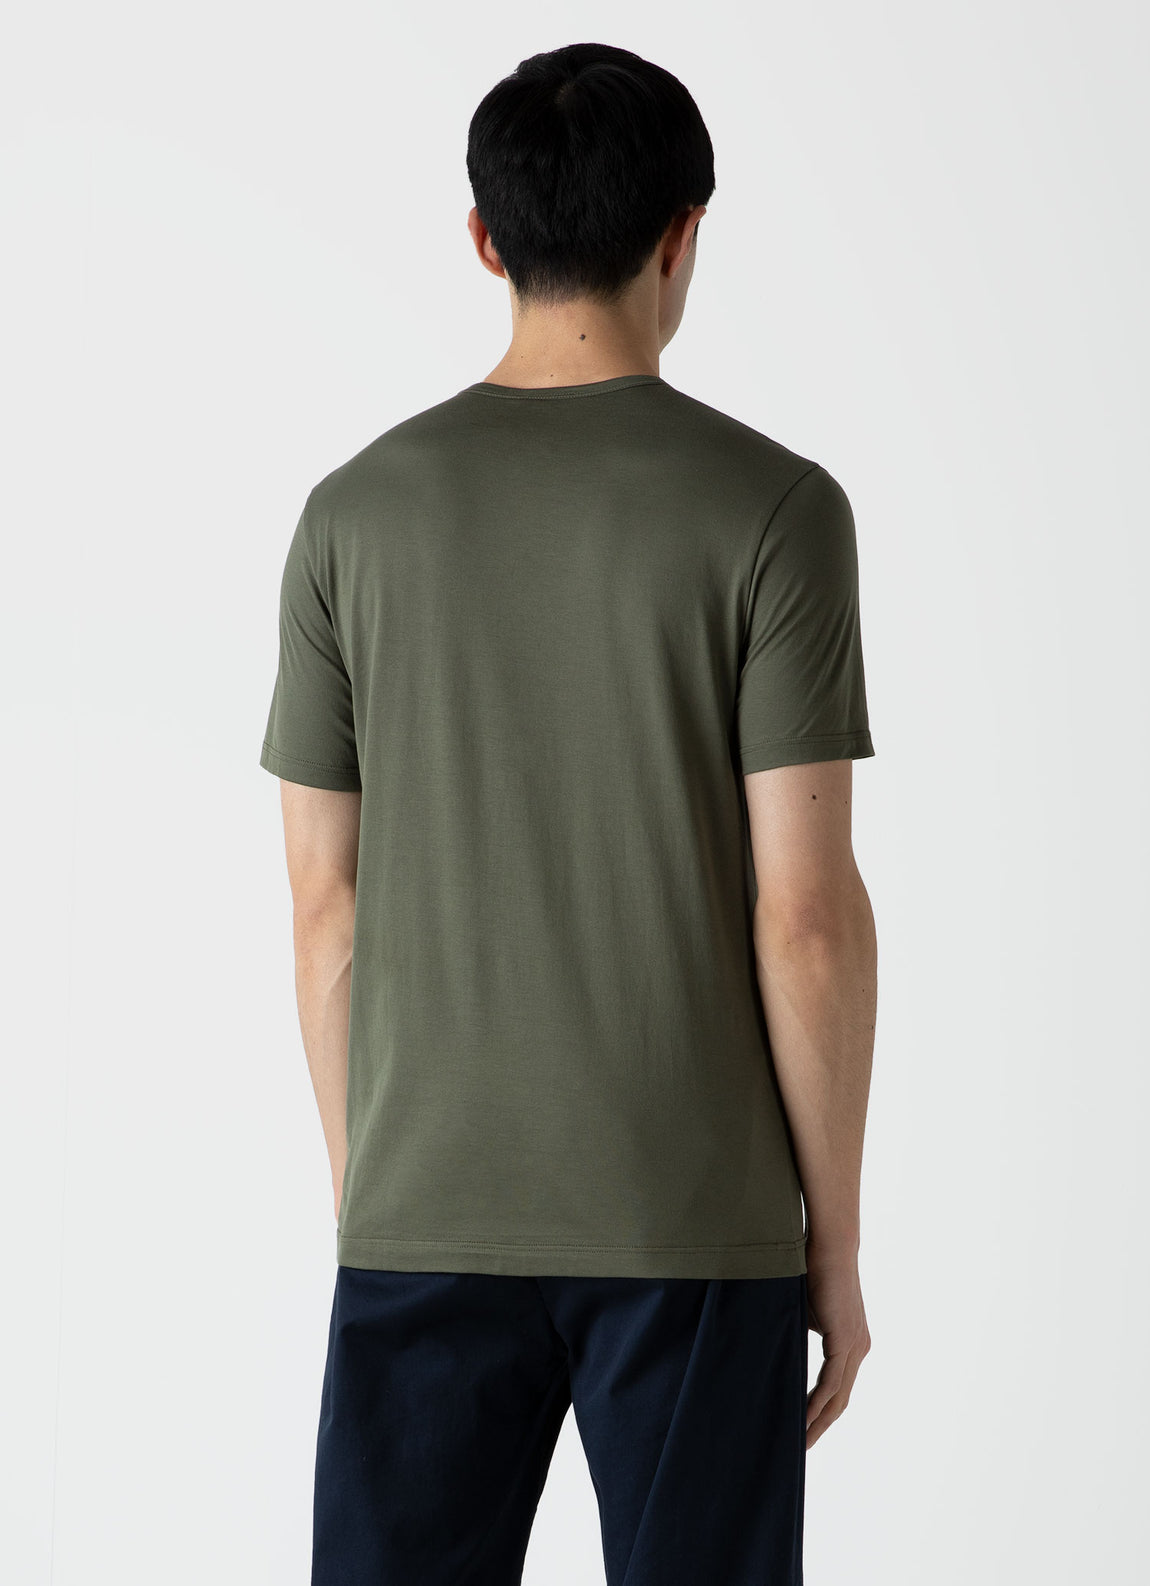 Turbulens Ikke vigtigt Investere Men's Classic T-shirt in Hunter Green | Sunspel